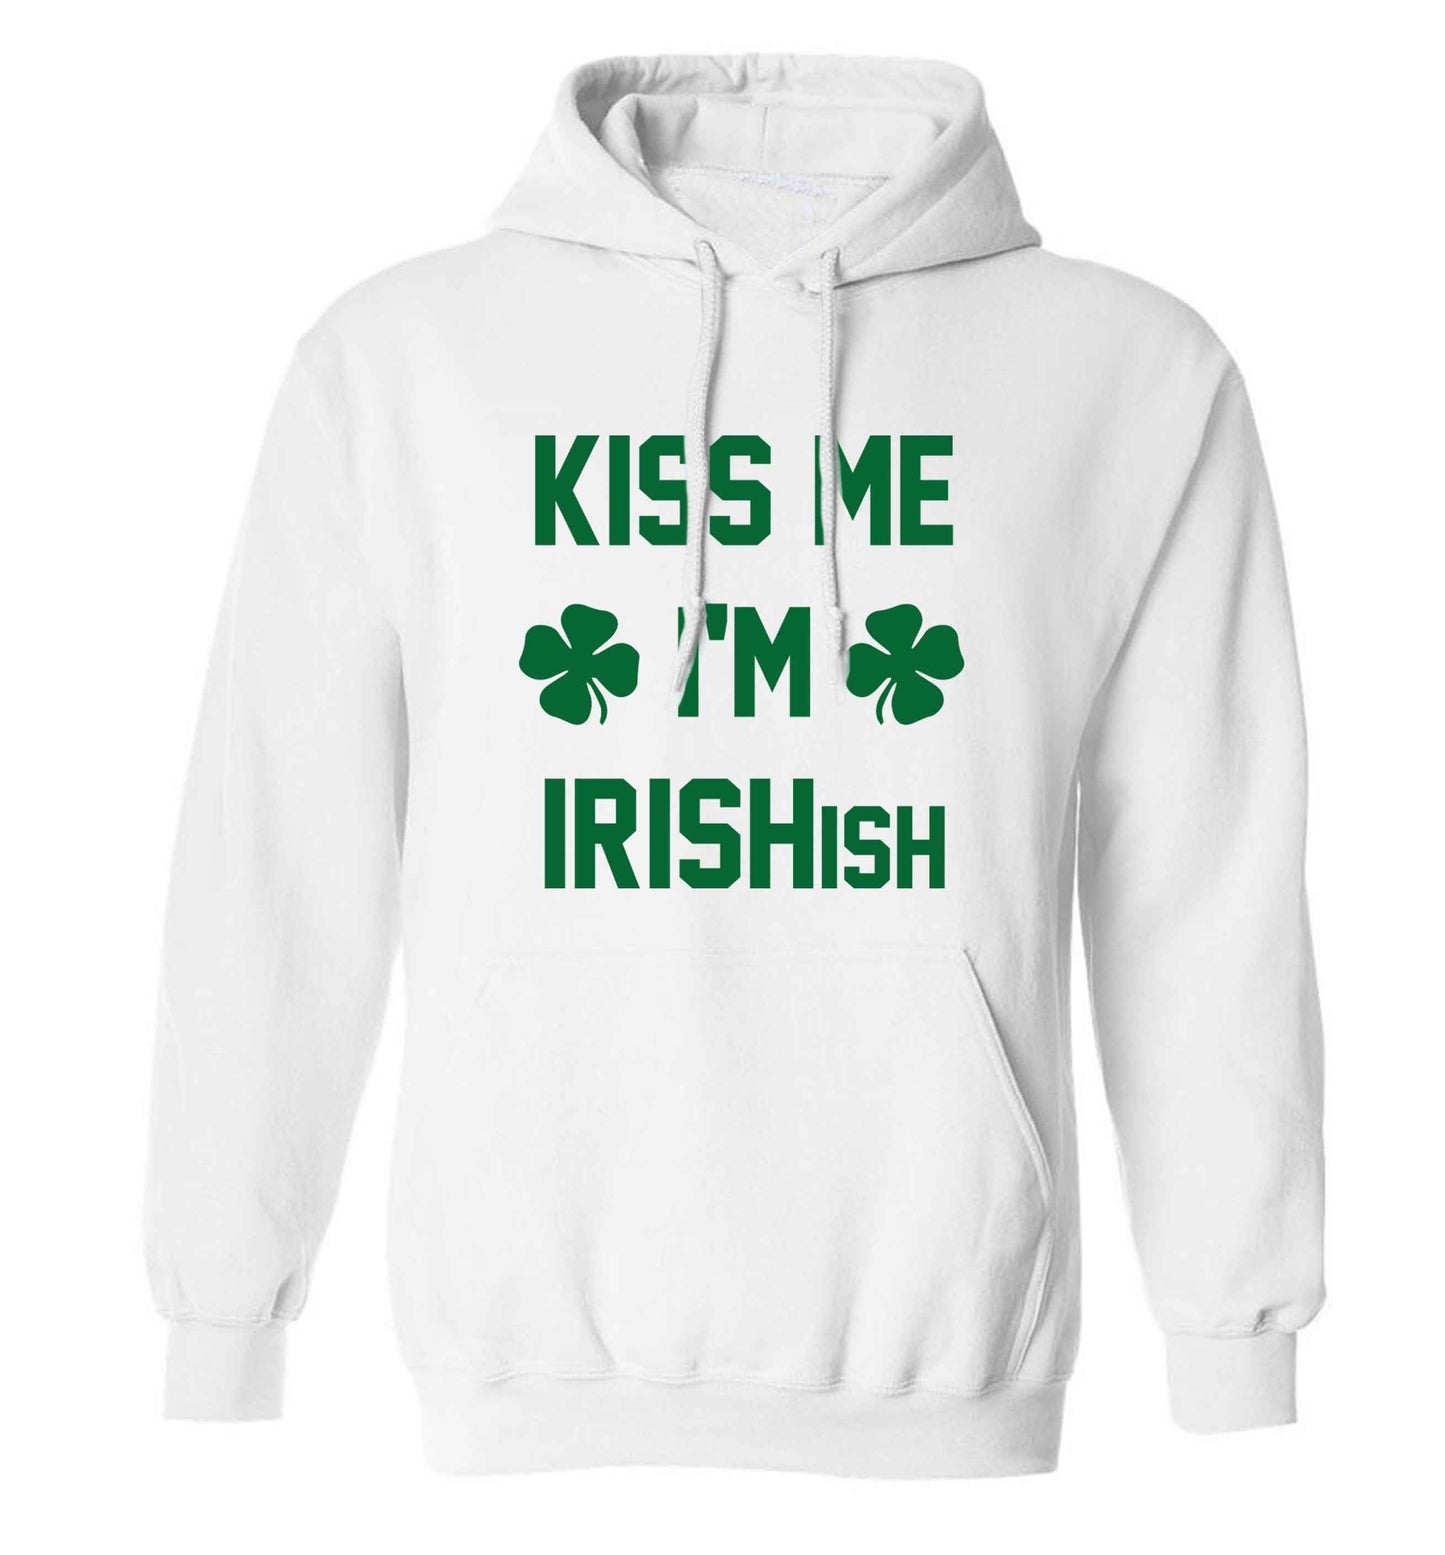 Kiss me I'm Irishish adults unisex white hoodie 2XL